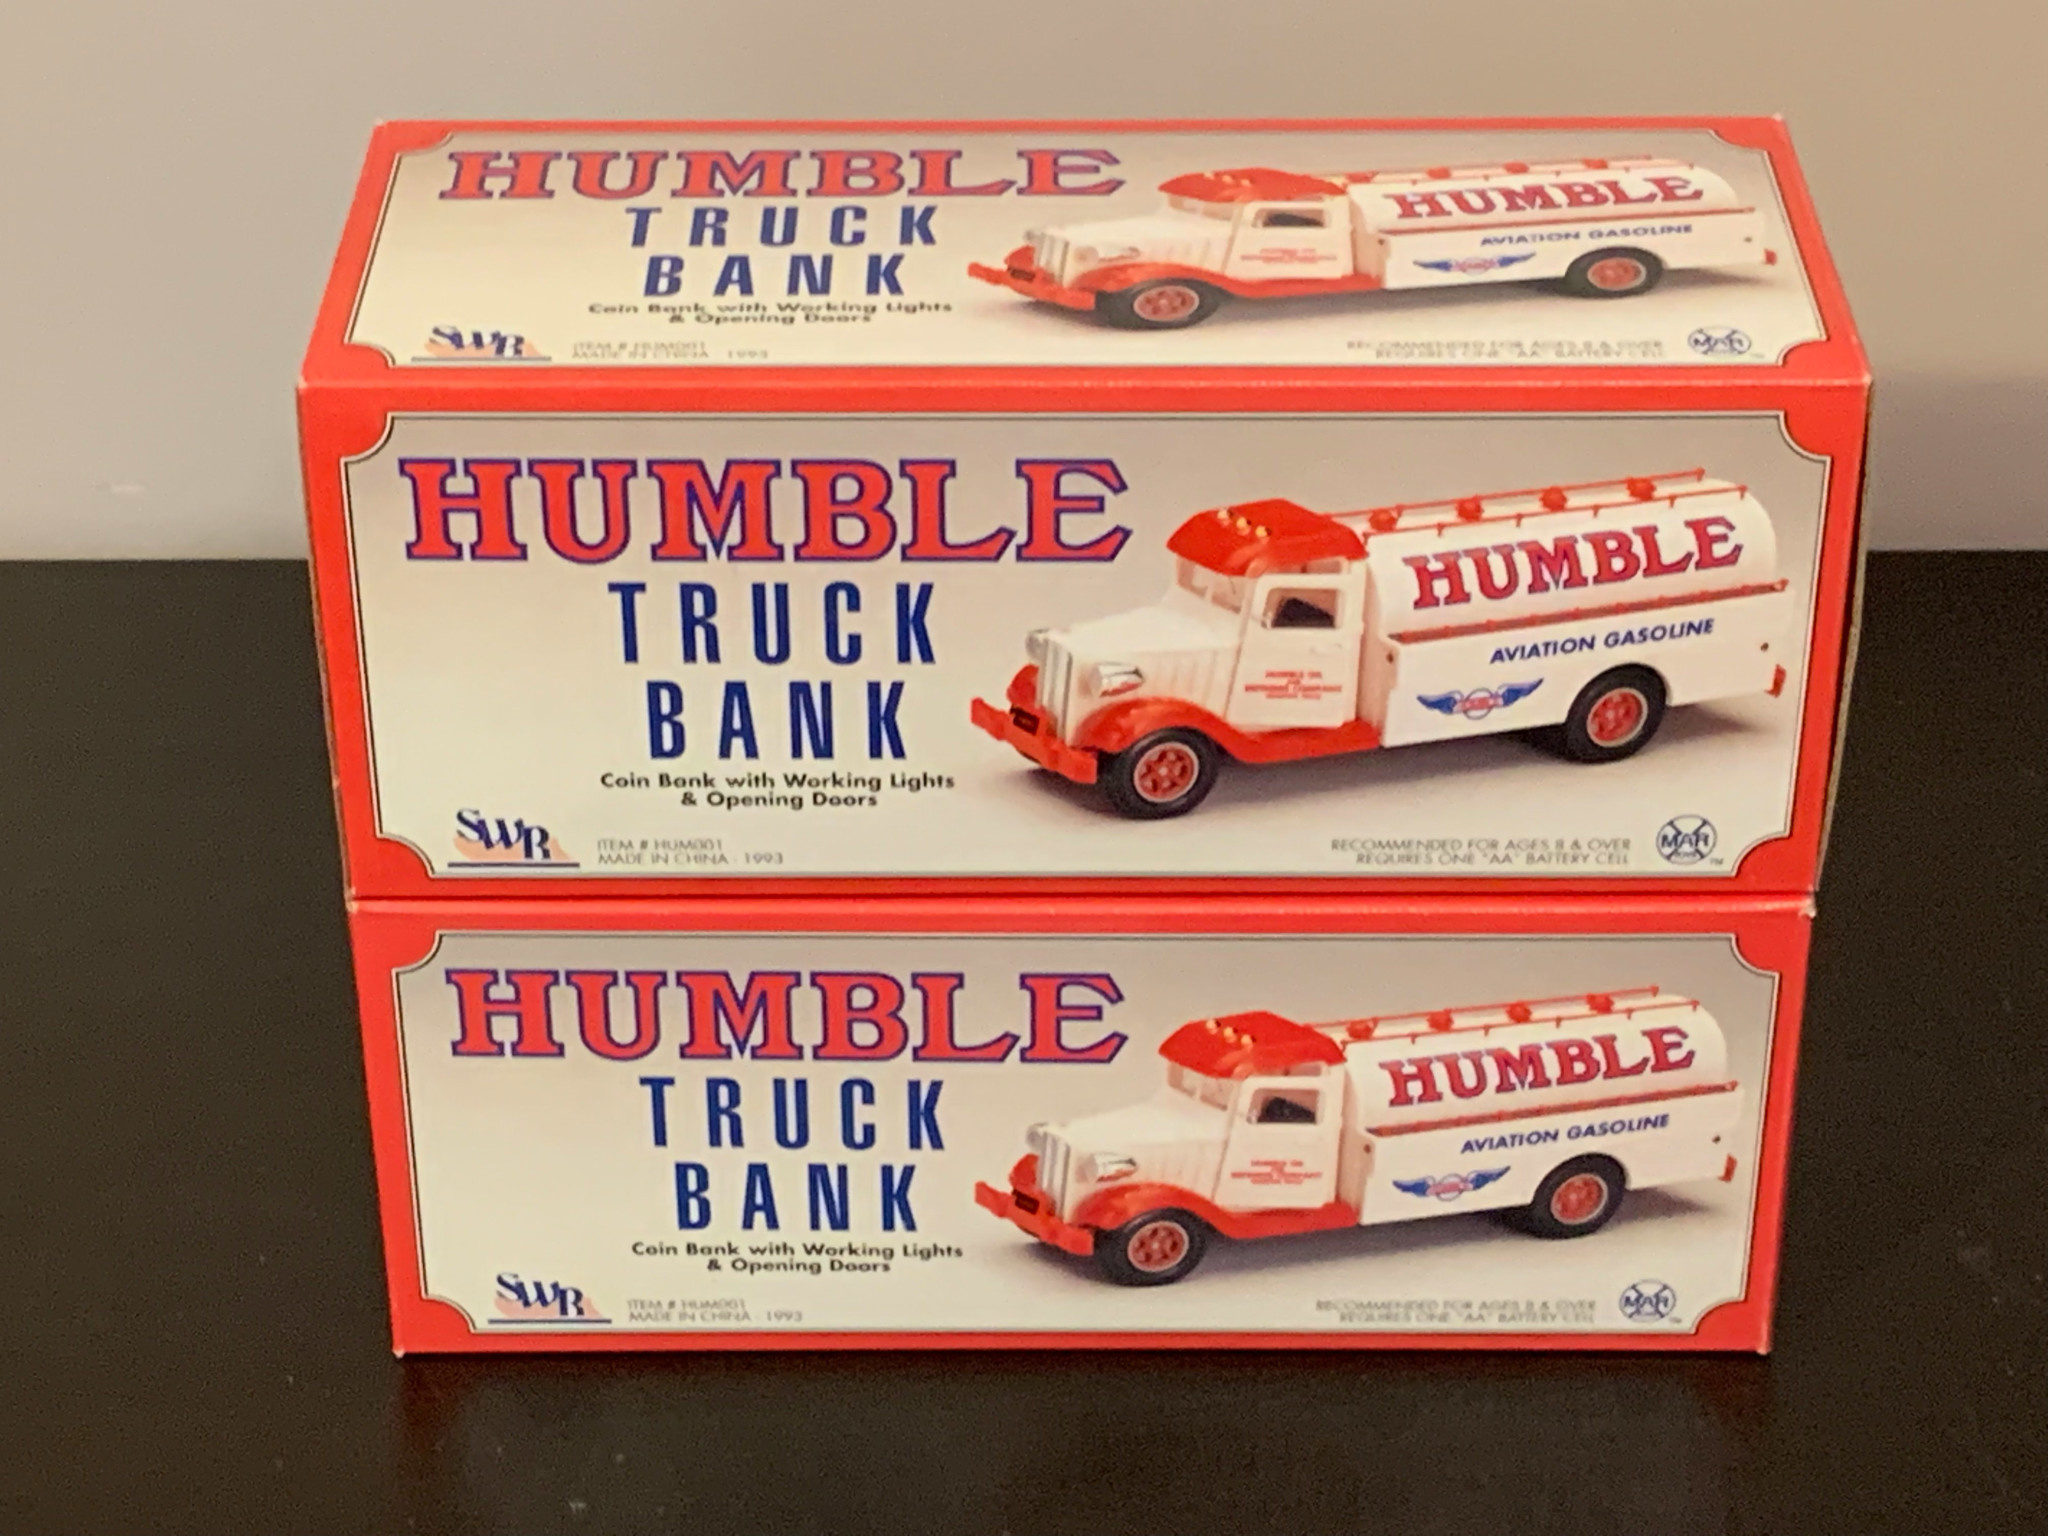 1993 Humble Aviation Gasoline Truck Bank